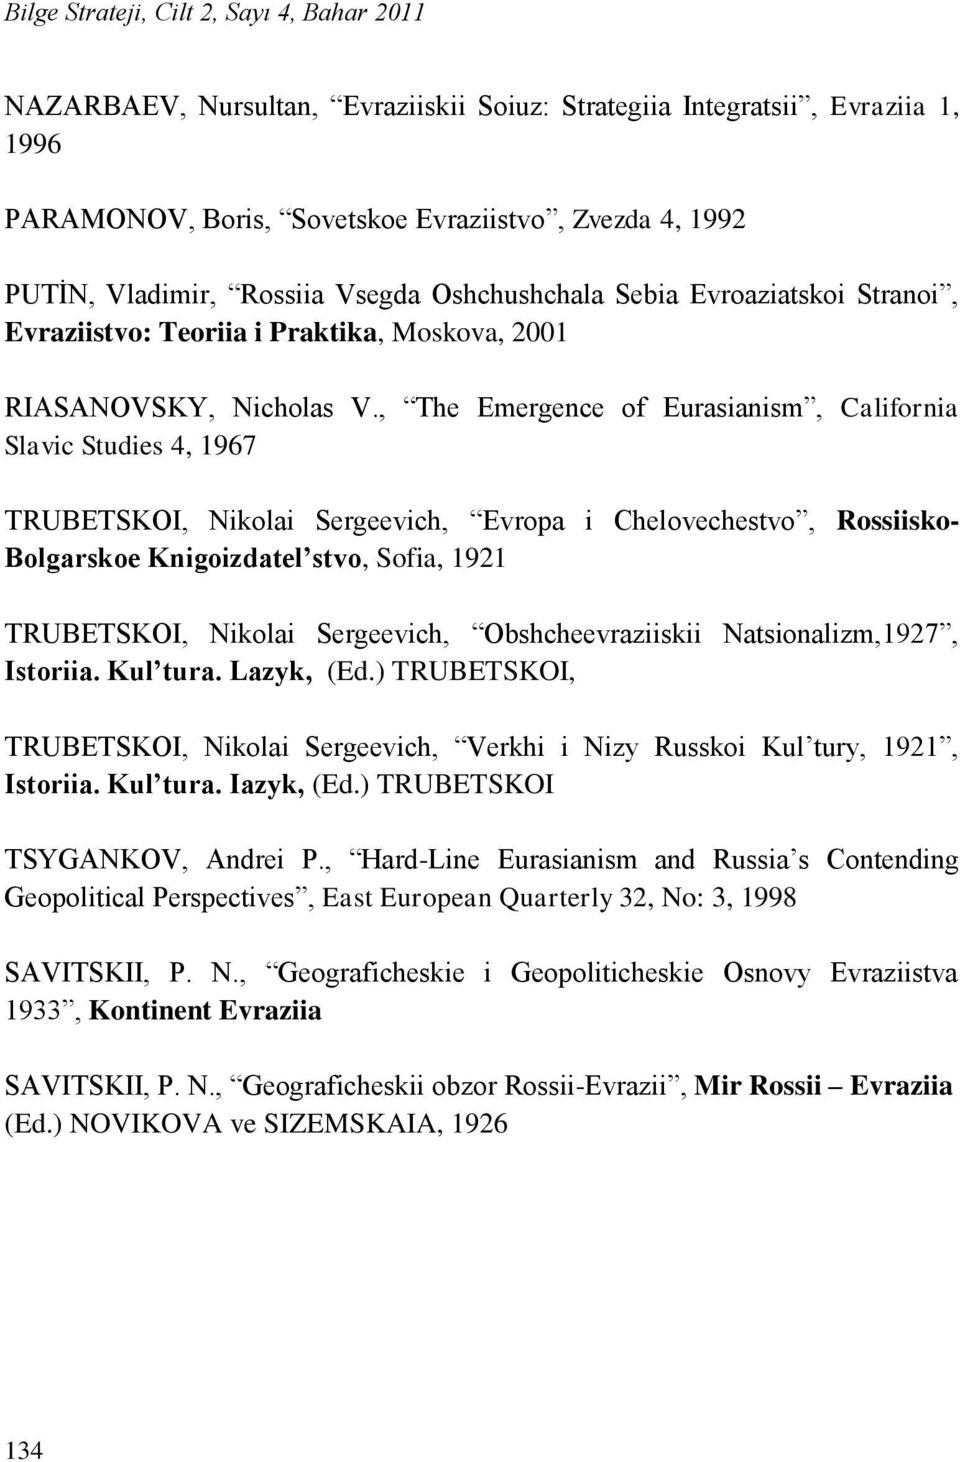 , The Emergence of Eurasianism, California Slavic Studies 4, 1967 TRUBETSKOI, Nikolai Sergeevich, Evropa i Chelovechestvo, Rossiisko- Bolgarskoe Knigoizdatel stvo, Sofia, 1921 TRUBETSKOI, Nikolai